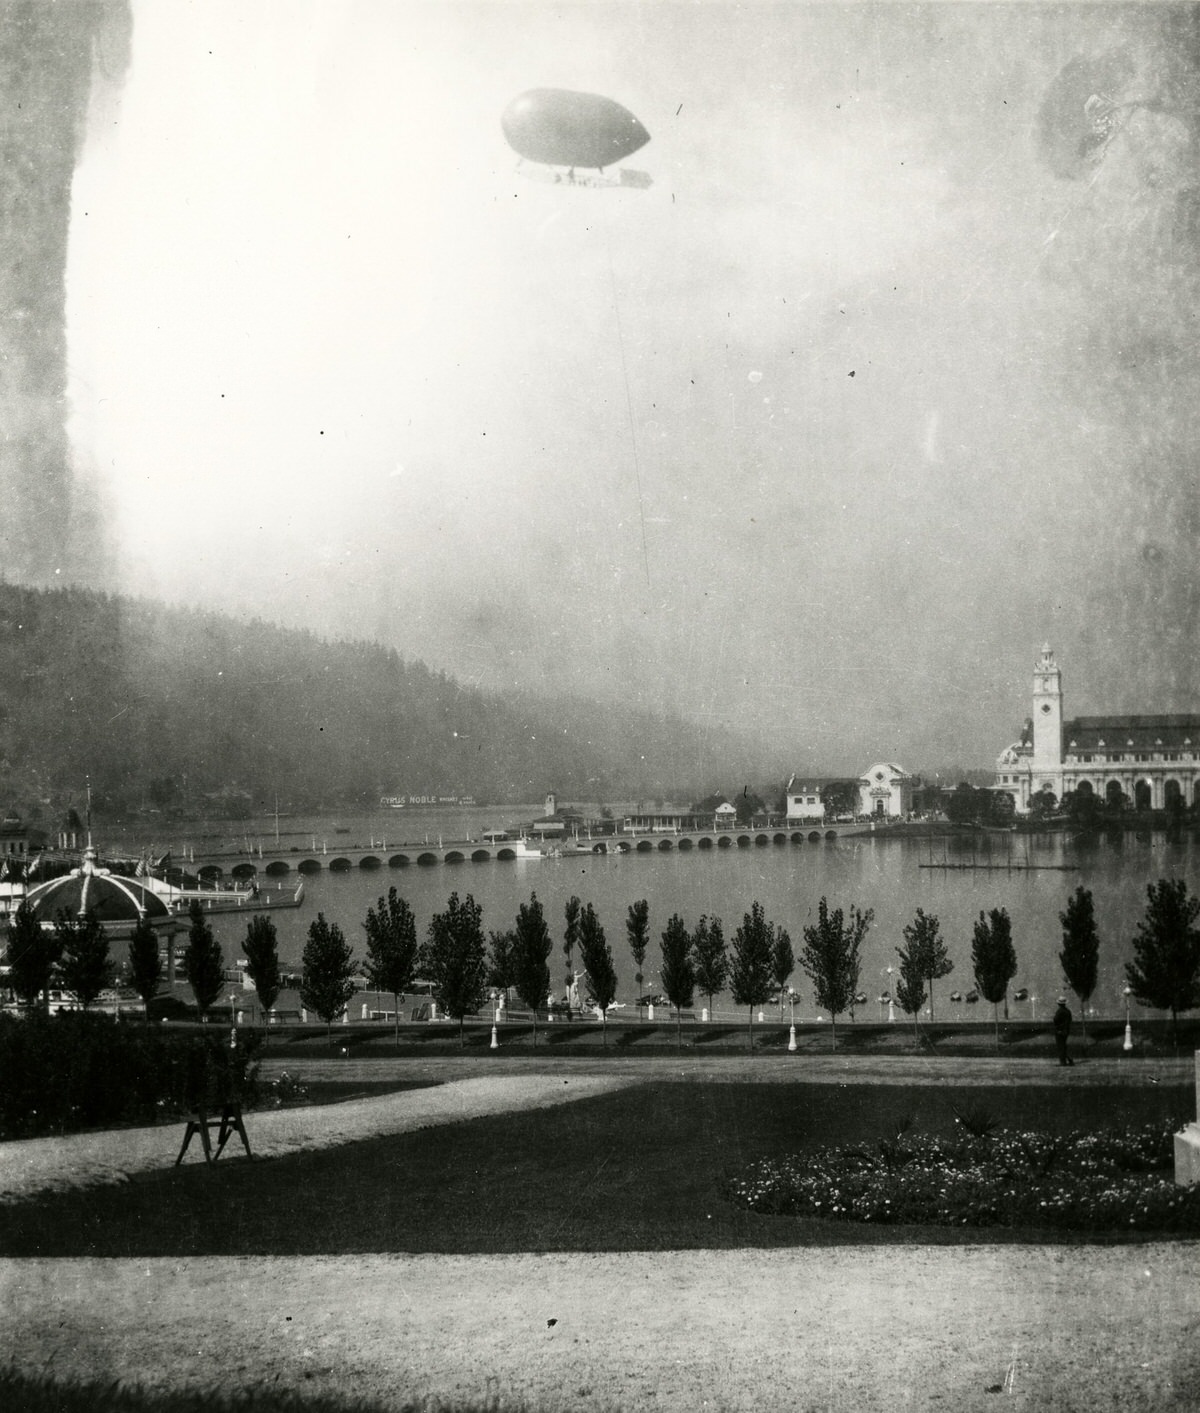 Lewis and Clark Centennial Exposition, 1905